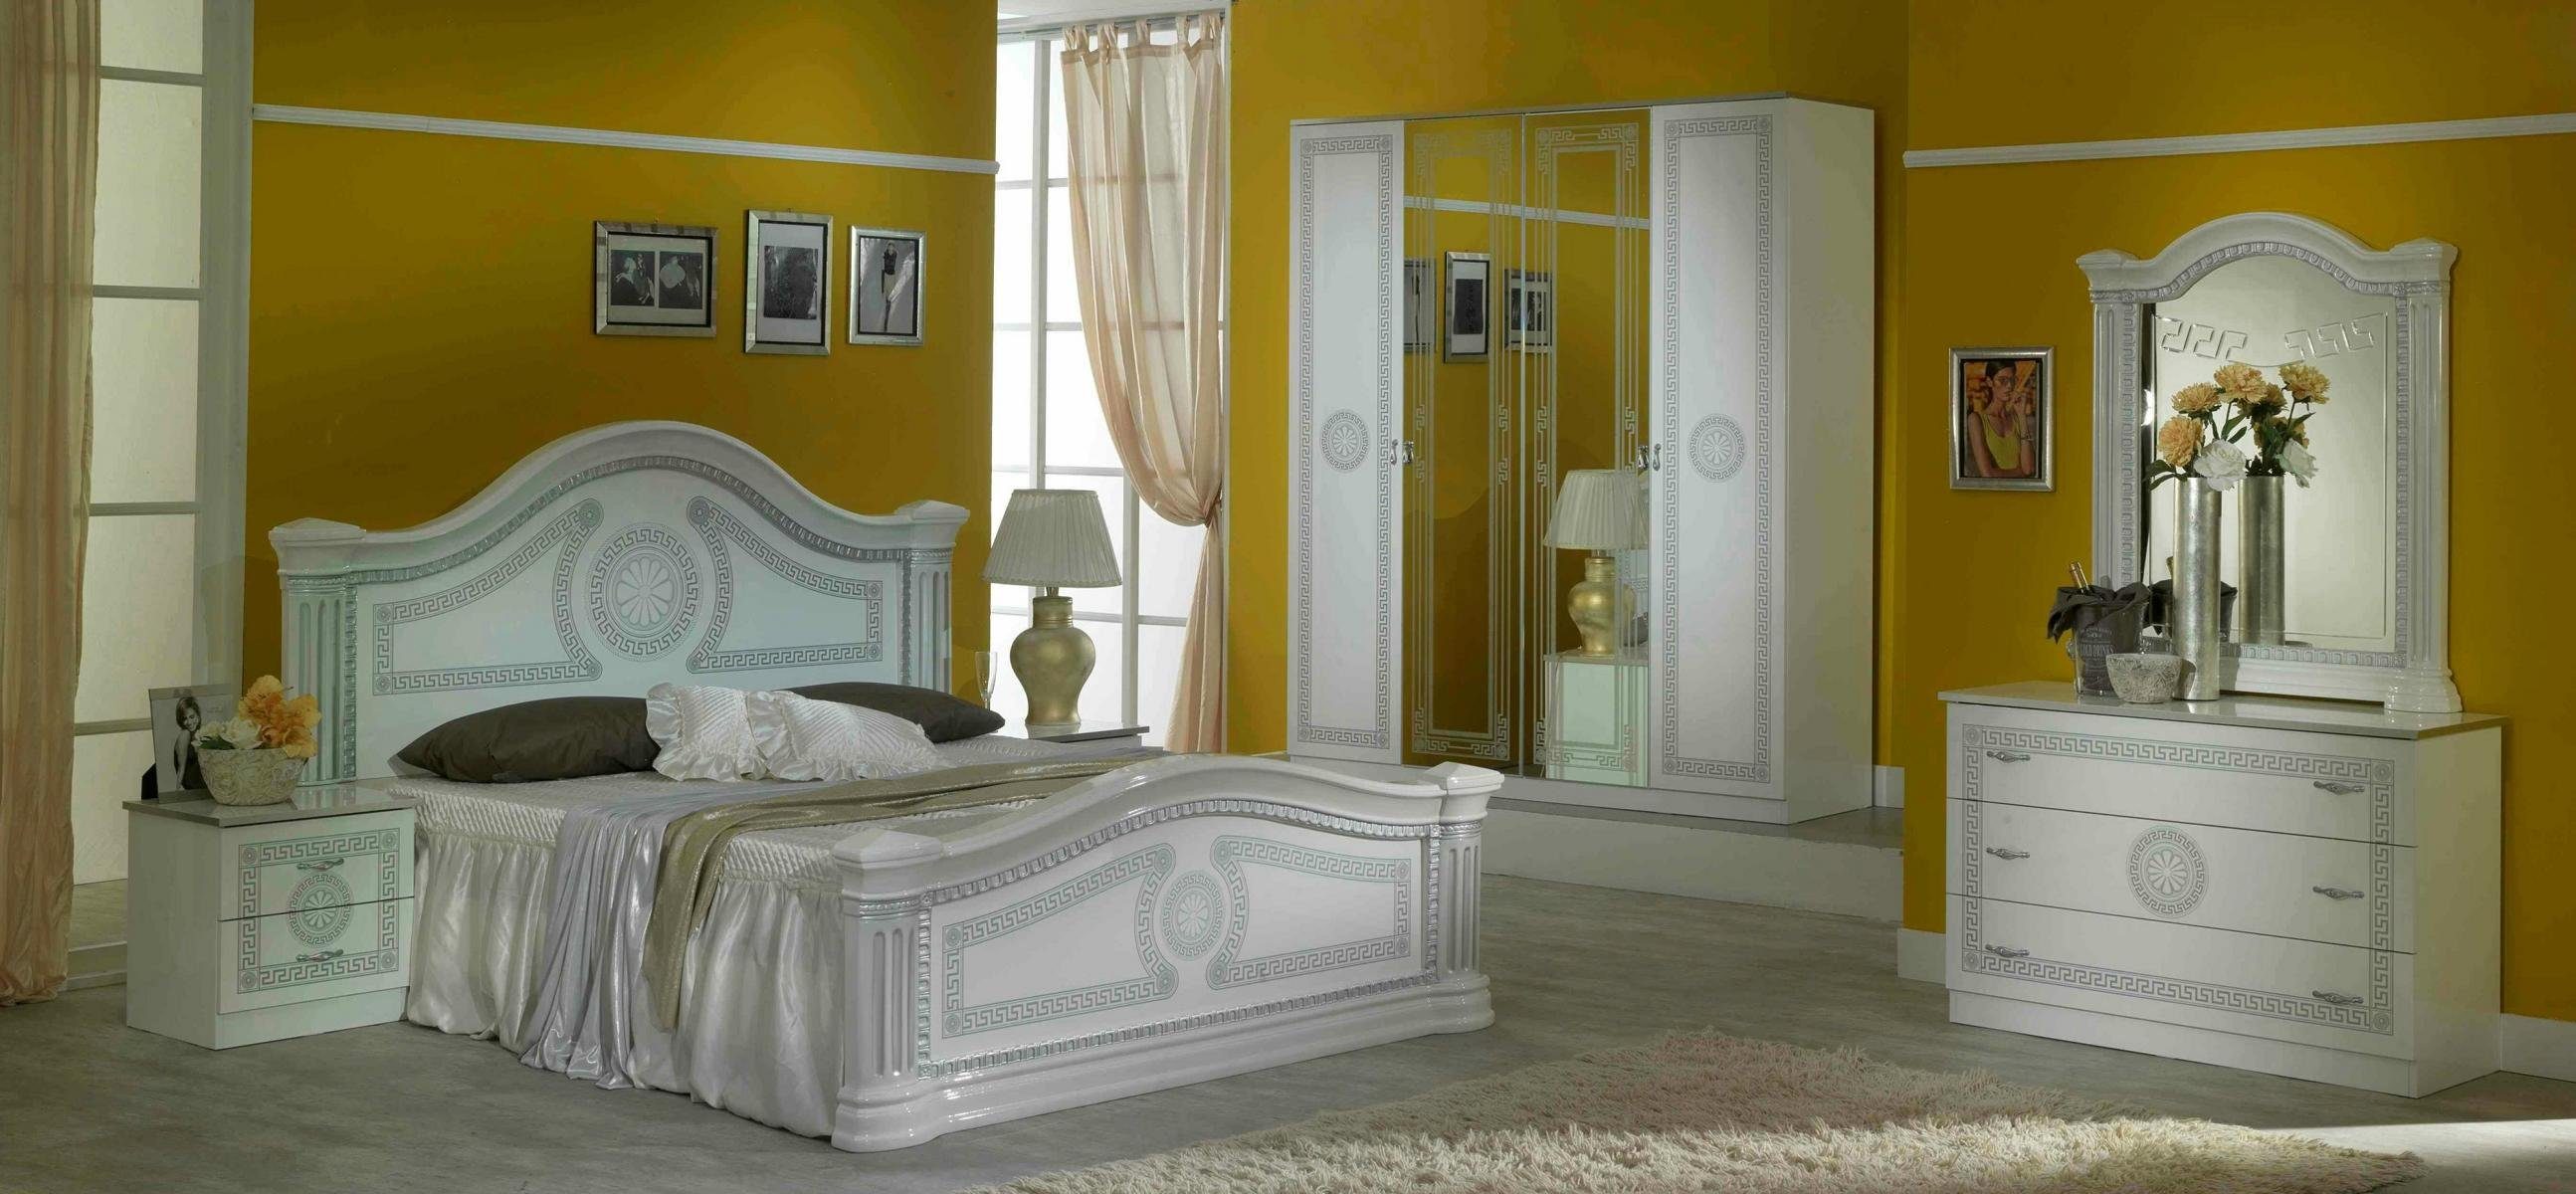 JVmoebel Bett, Designer Bett Schlafzimmer Holz Hotel Klassische Betten Luxus